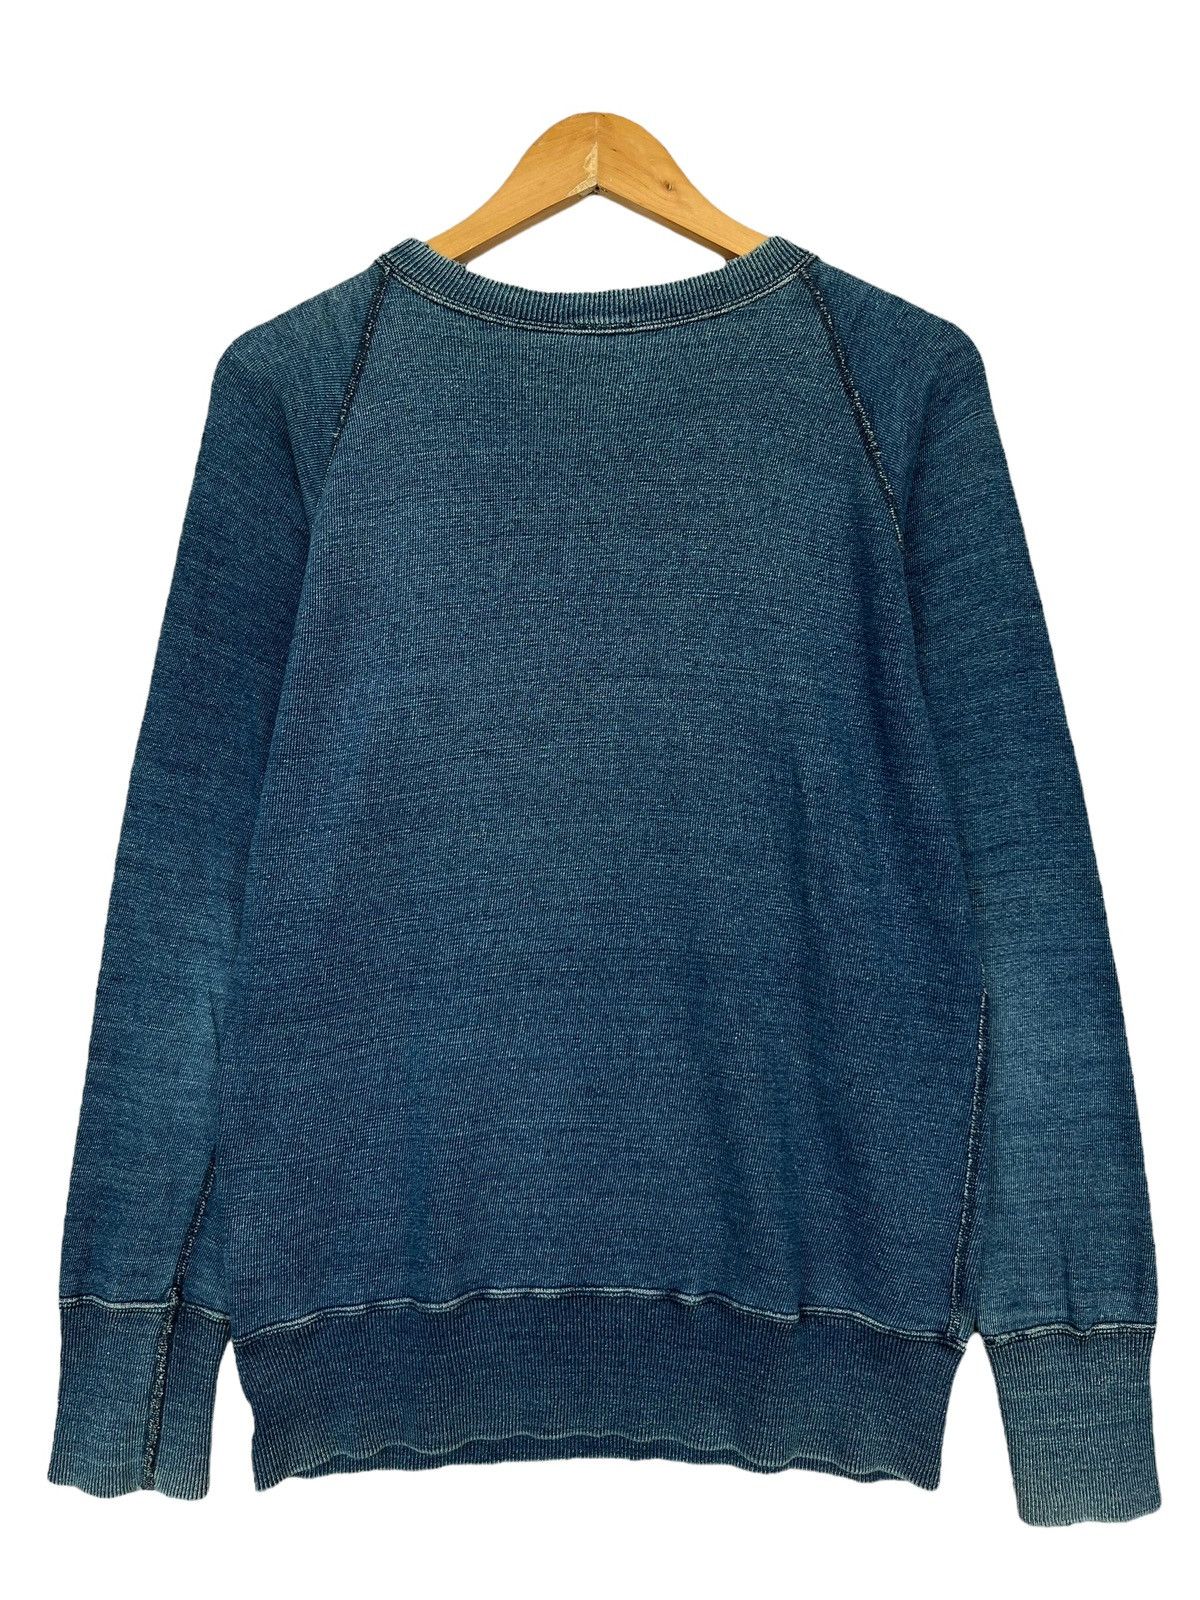 Vintage 45rpm Distressed Blue Sunfaded Sweatshirt - 2